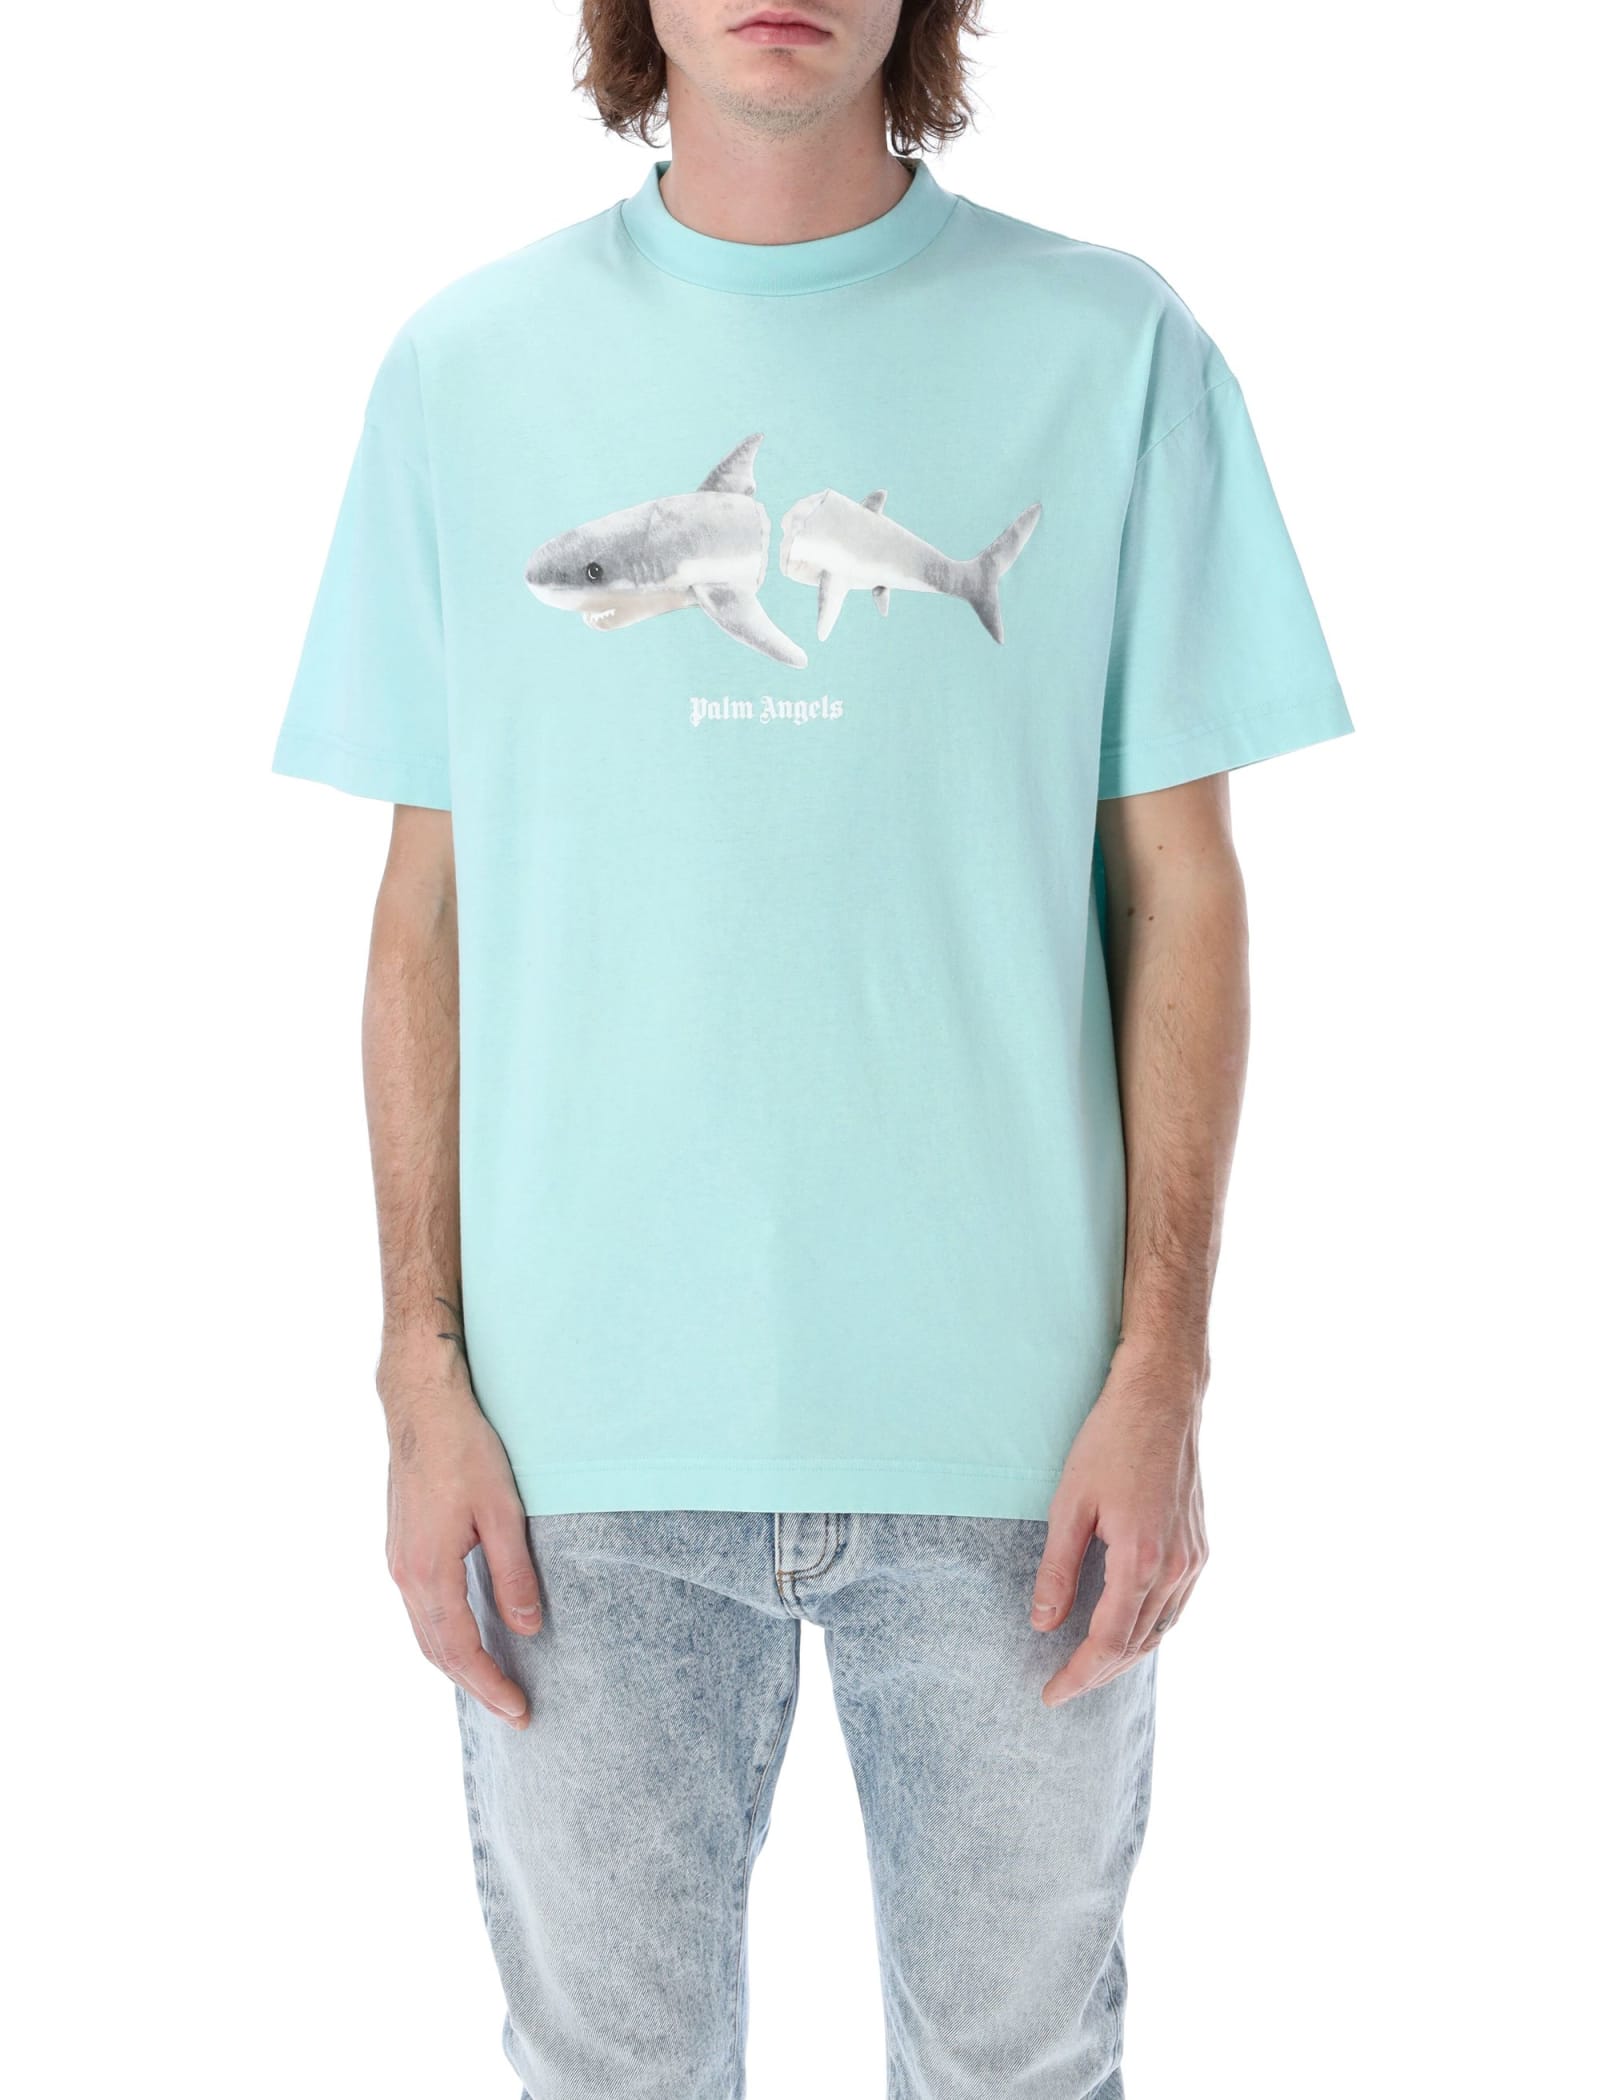 Palm Angels White Shark Classic T-shirt